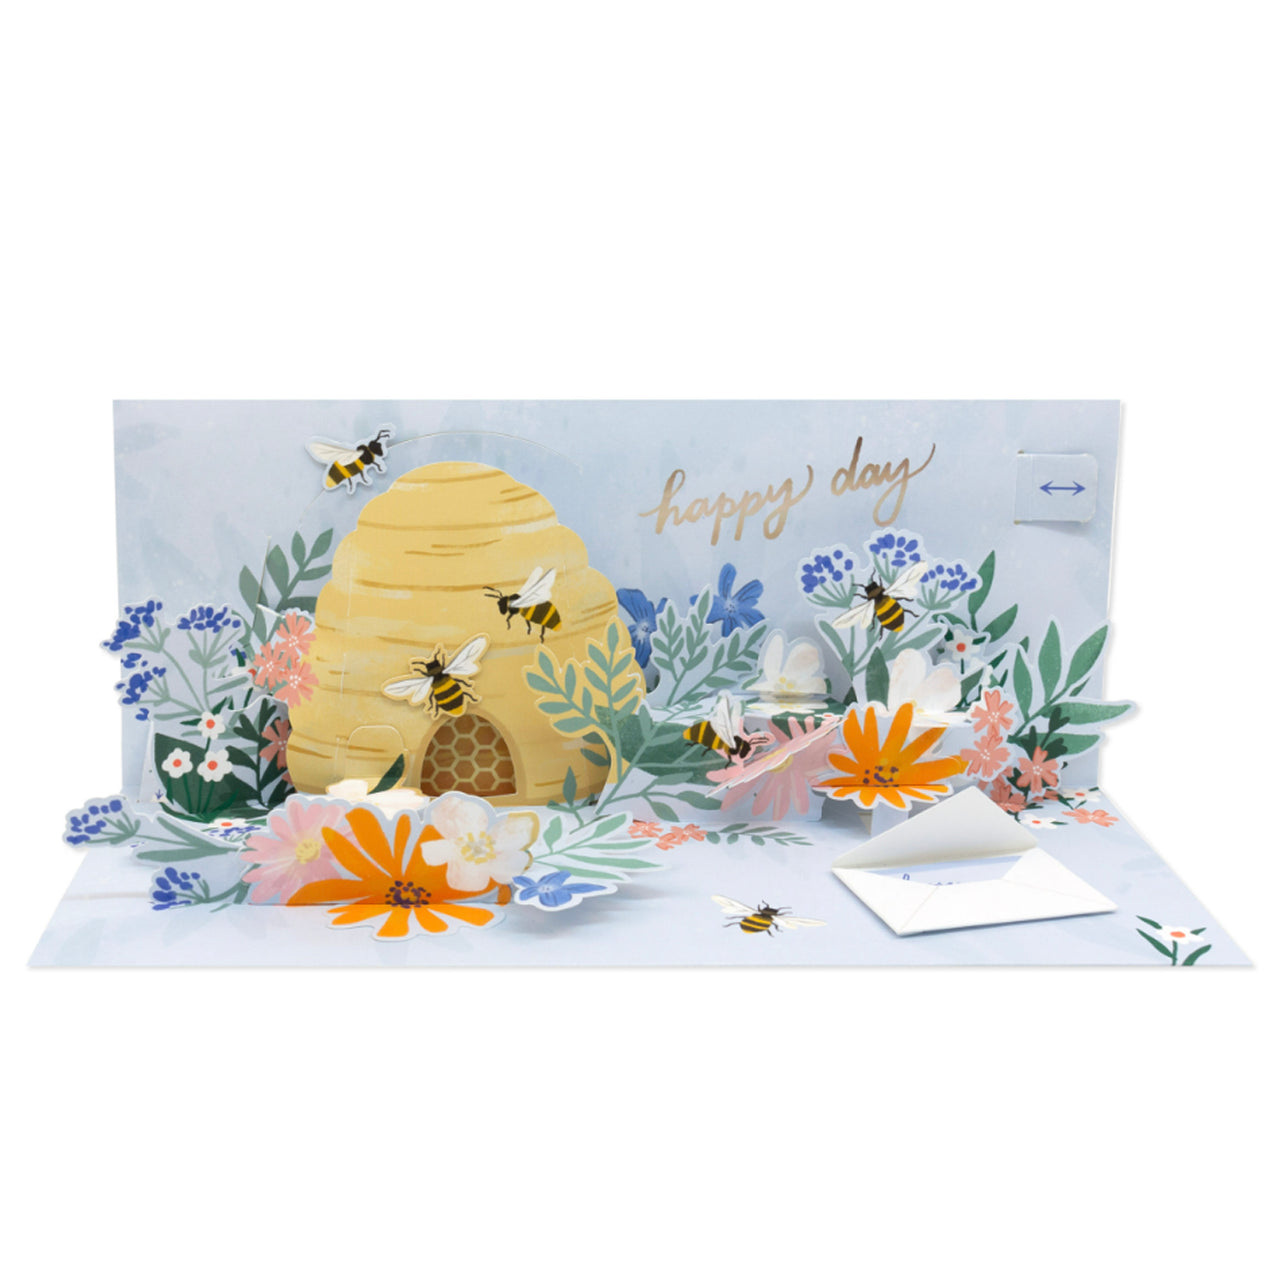 Honeybees Panoramic Greeting Card